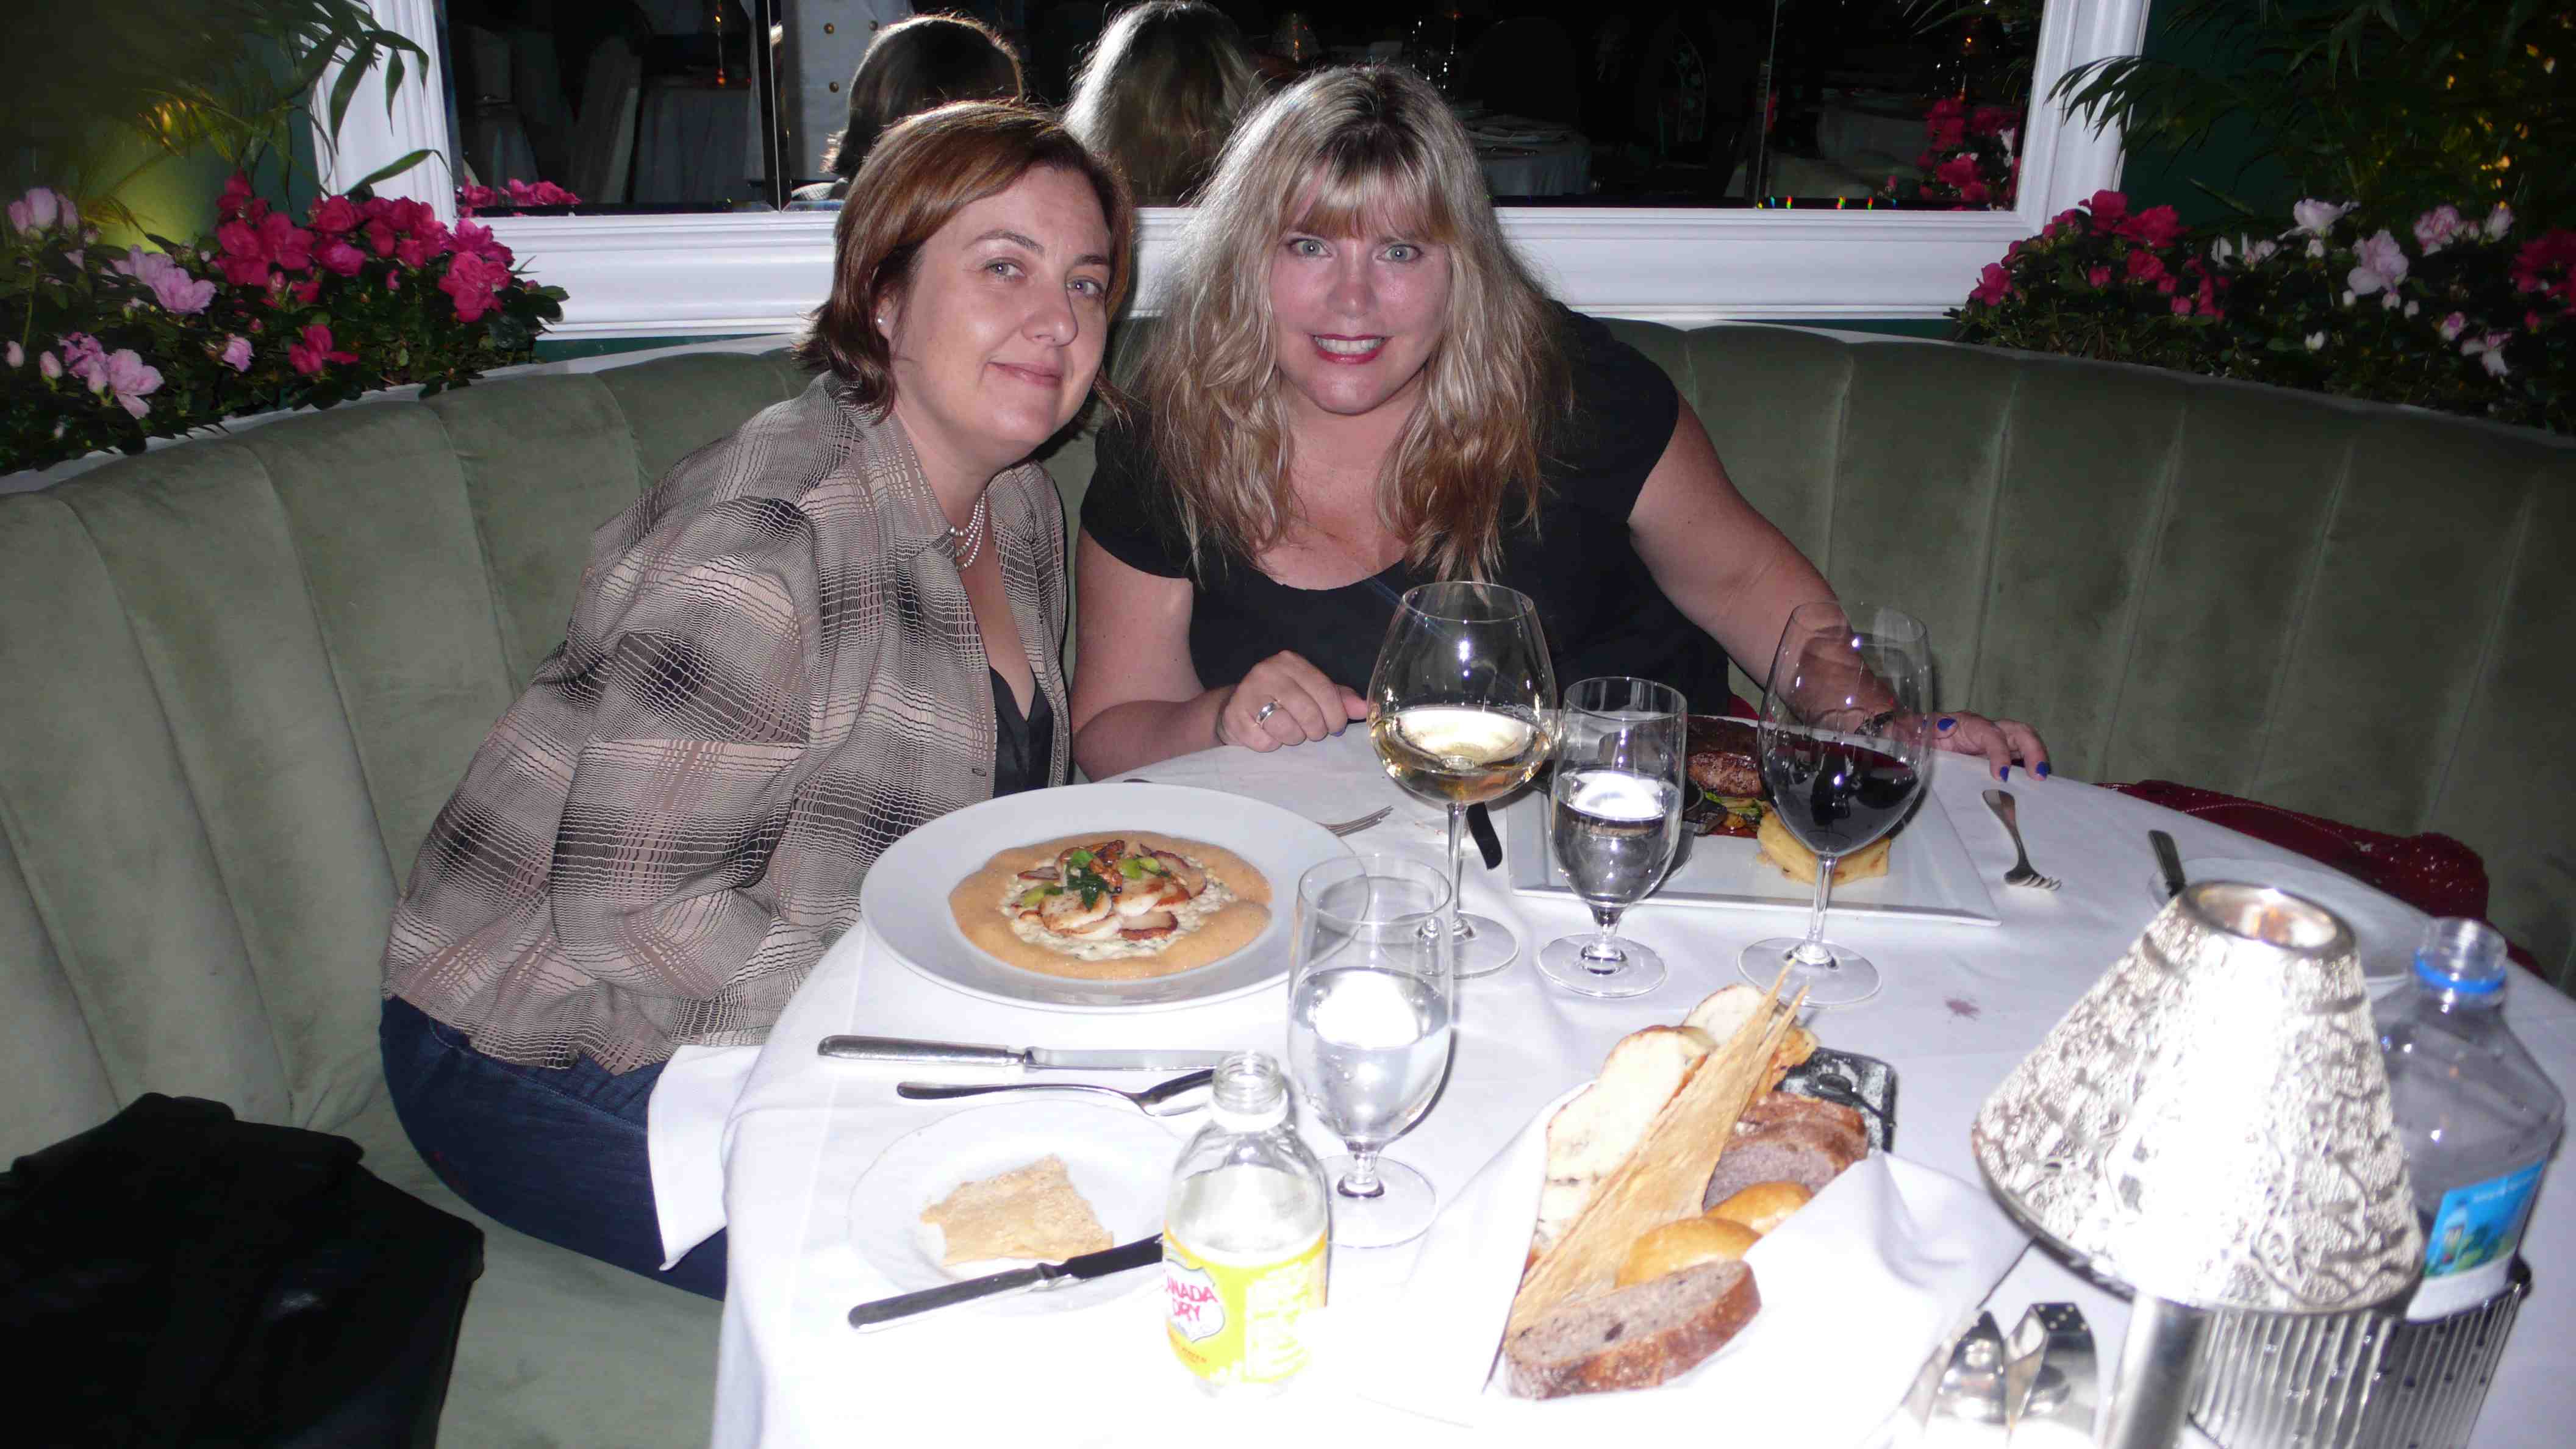 Nicole and me, enjoying dinner